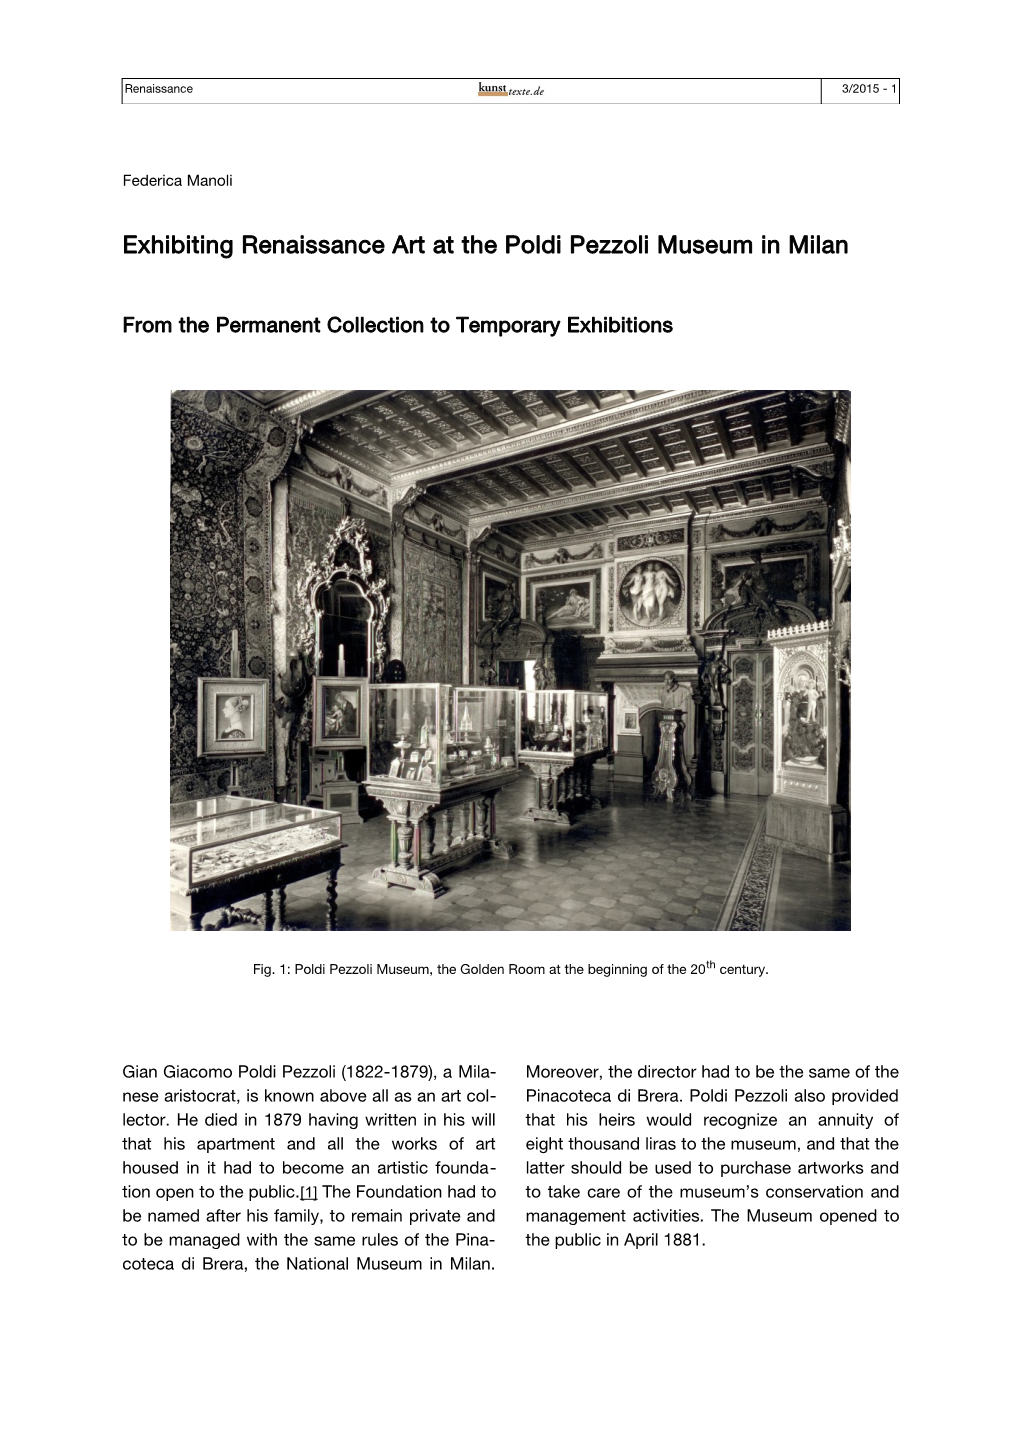 Exhibiting Renaissance Art at the Poldi Pezzoli Museum in Milan